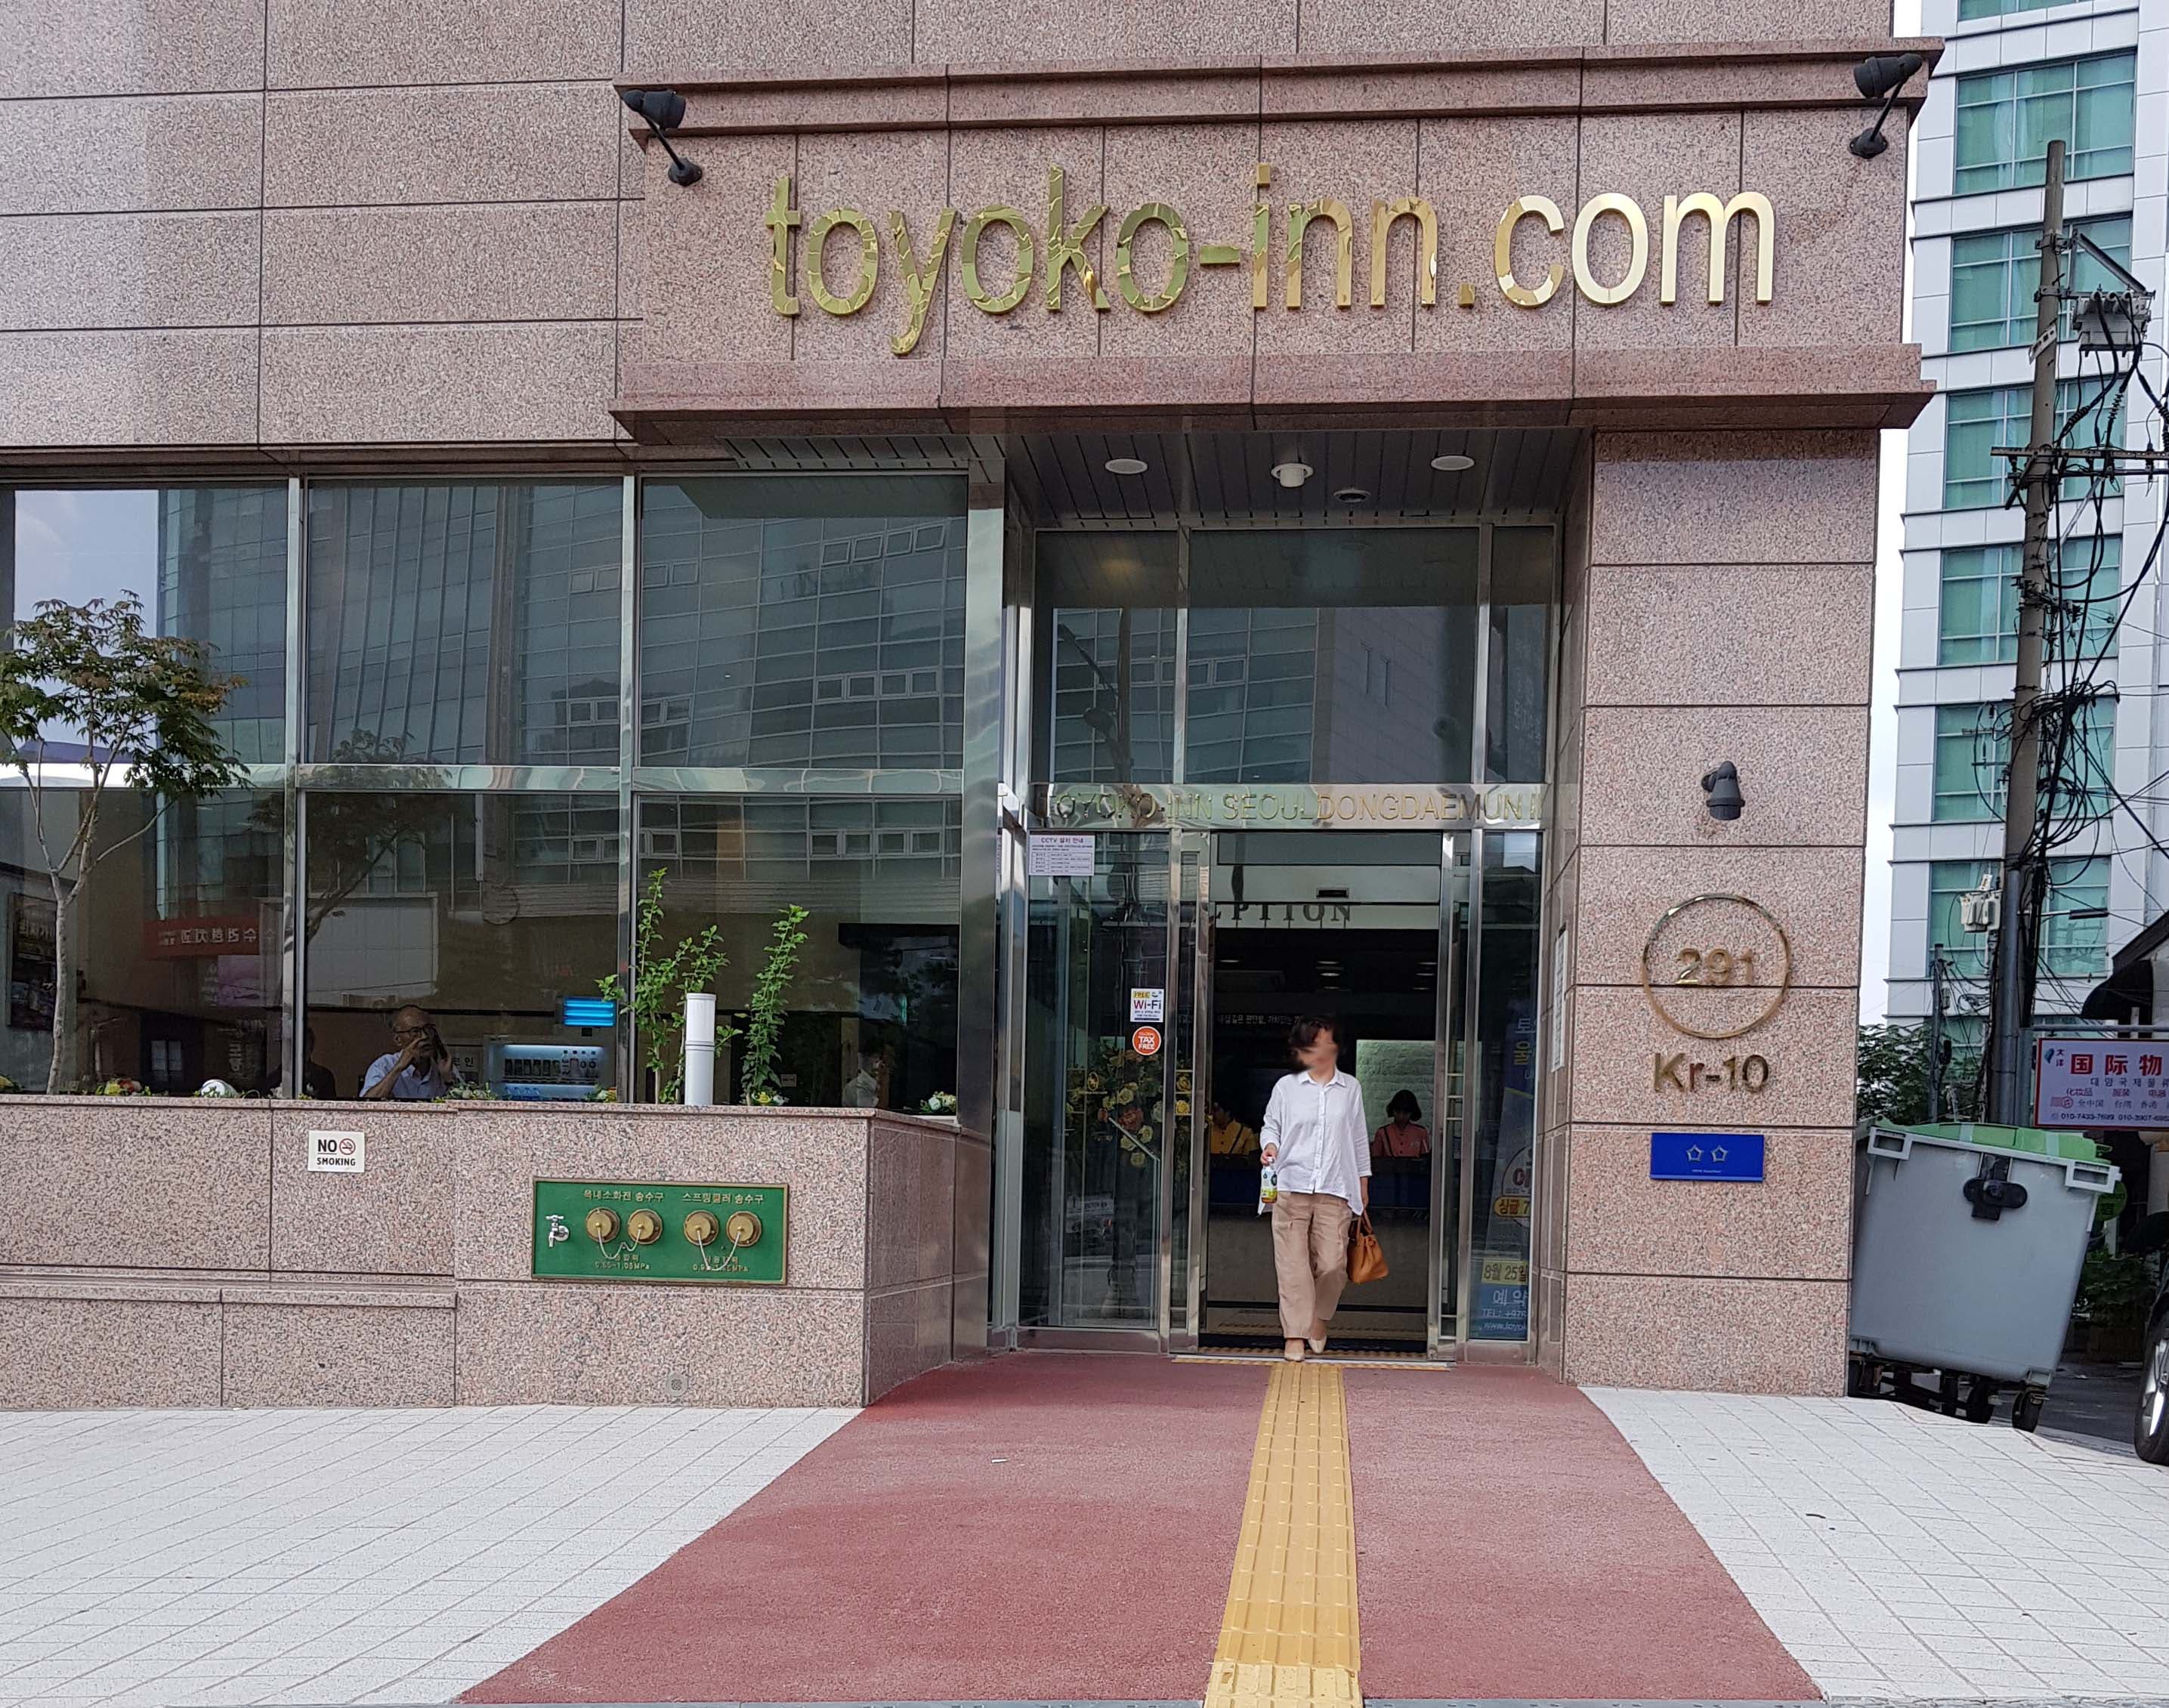 Main entrance0 : A view of Toyoko-inn Seoul Dongdaemun 2 Main Entrance